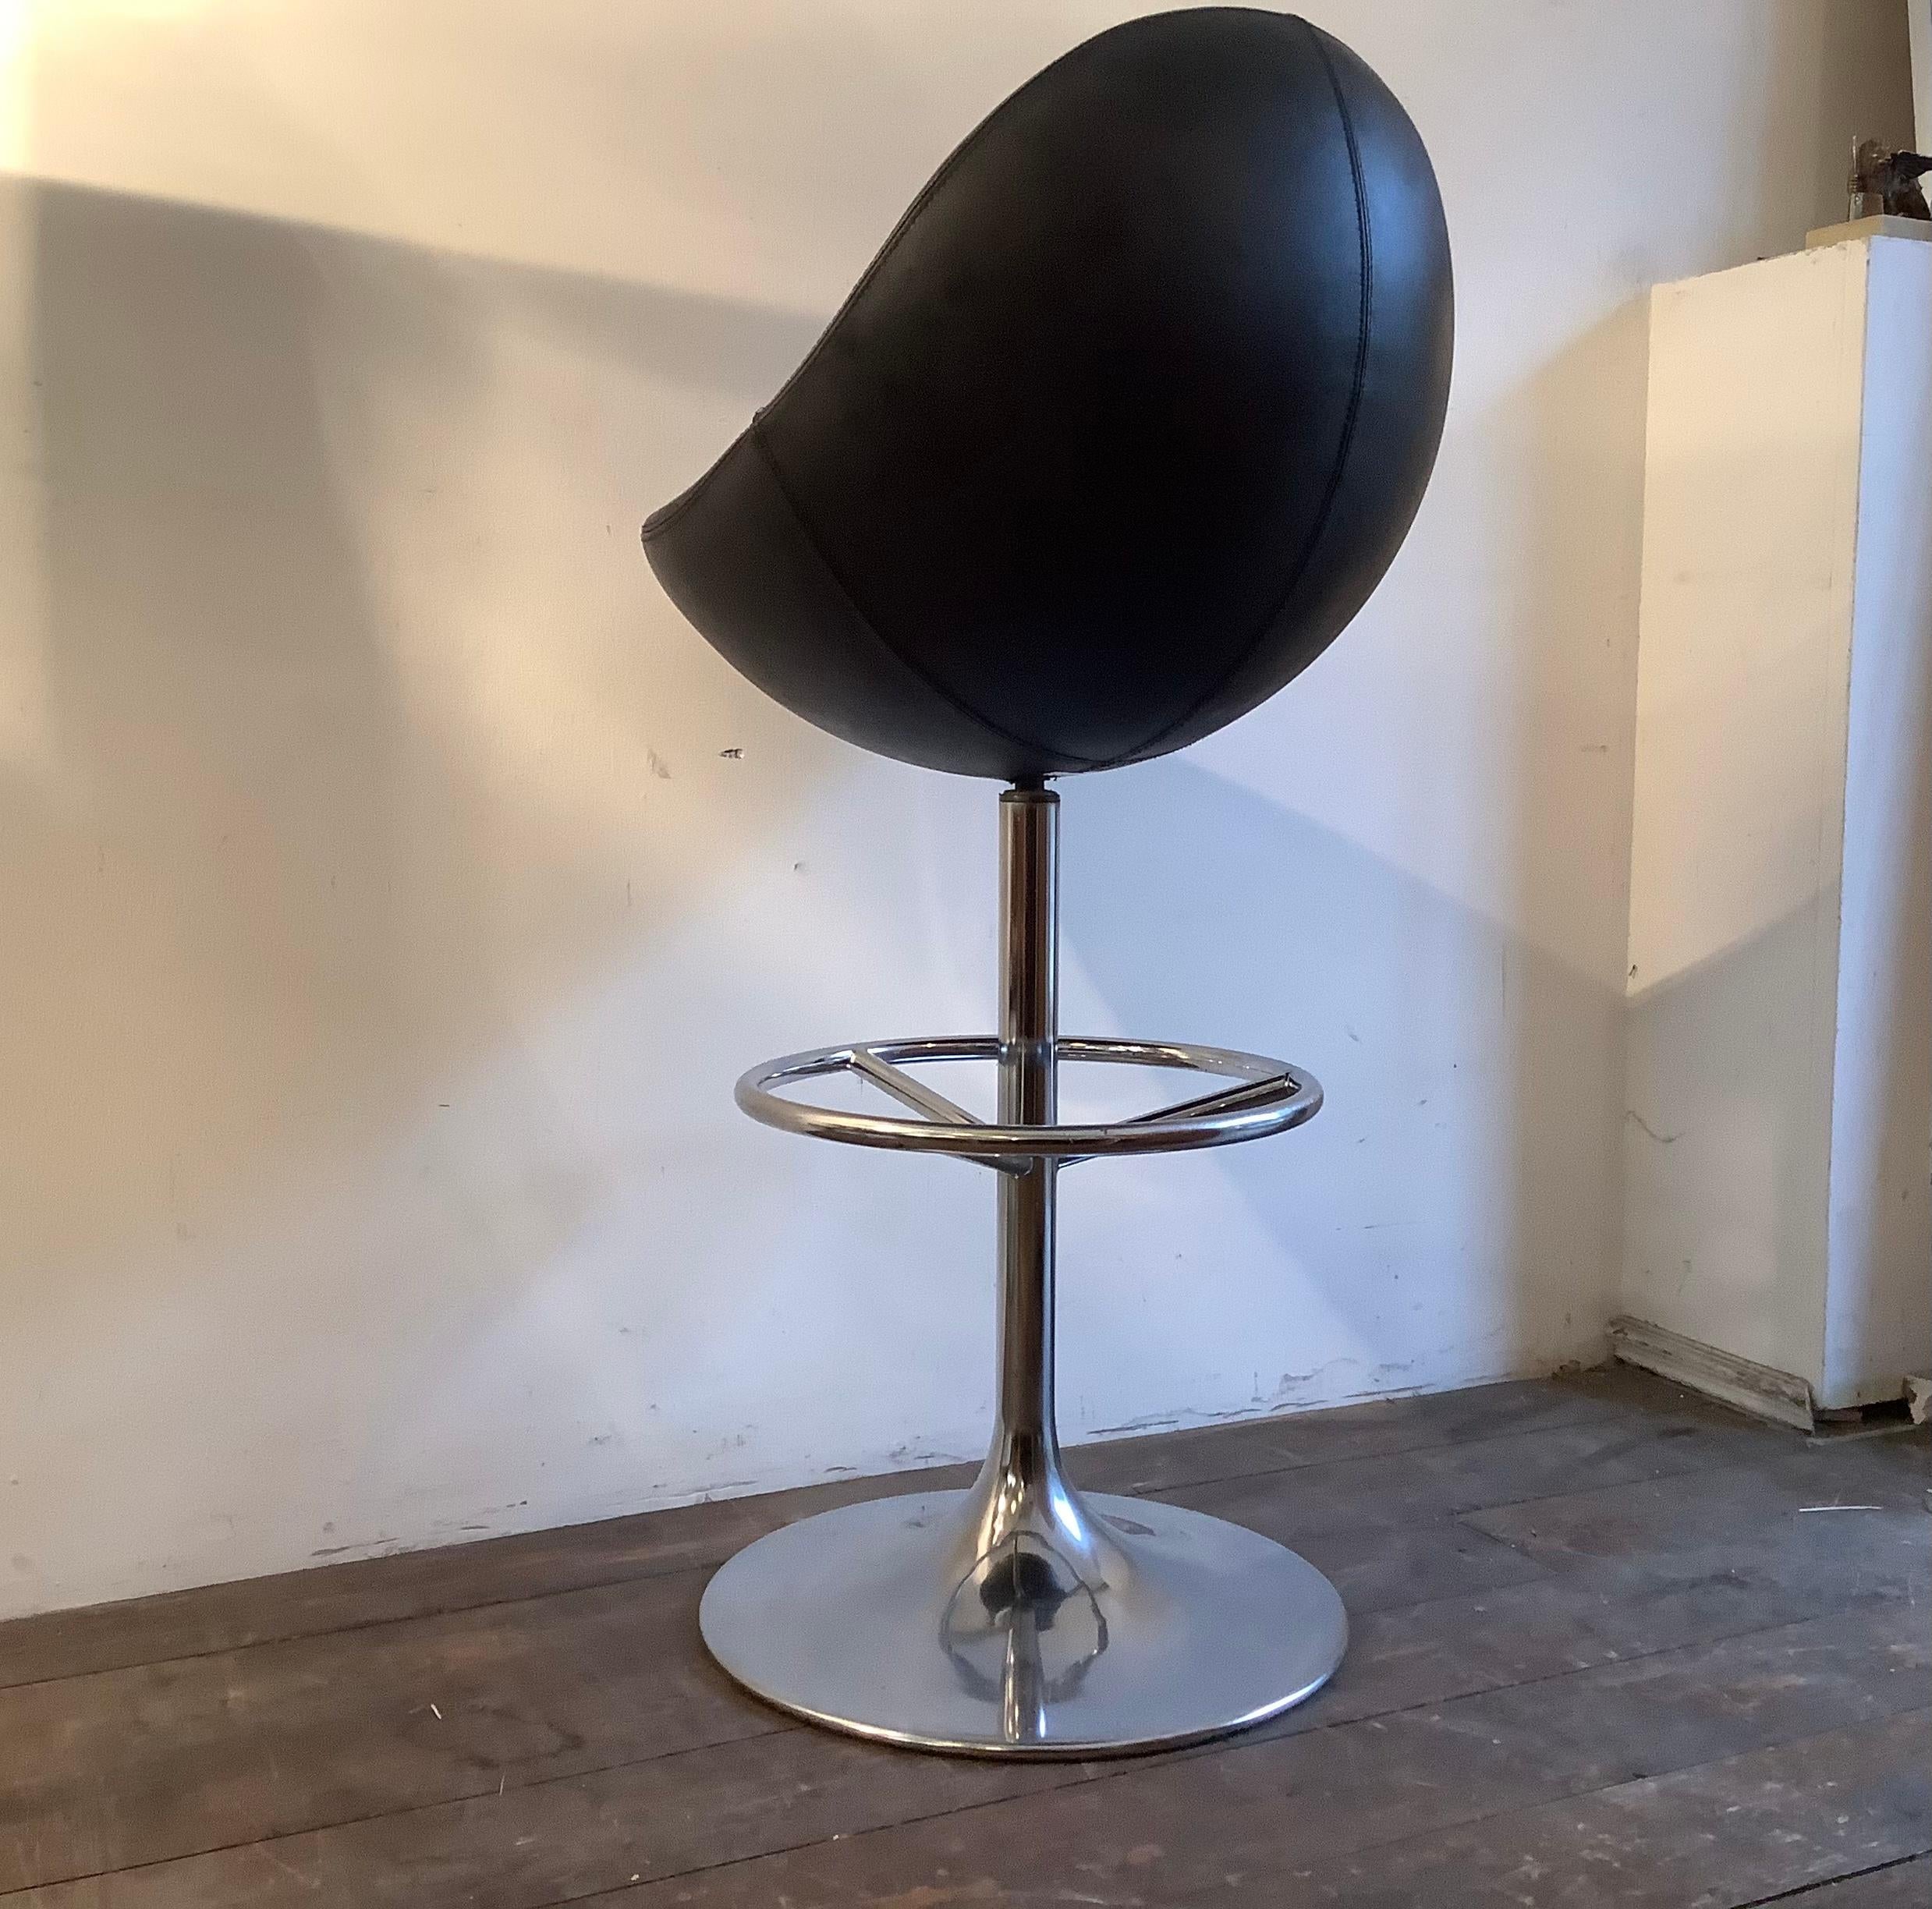 Black vinyl swivel bar stool with a Classic trumpet base
Designed by Borja Johansson.